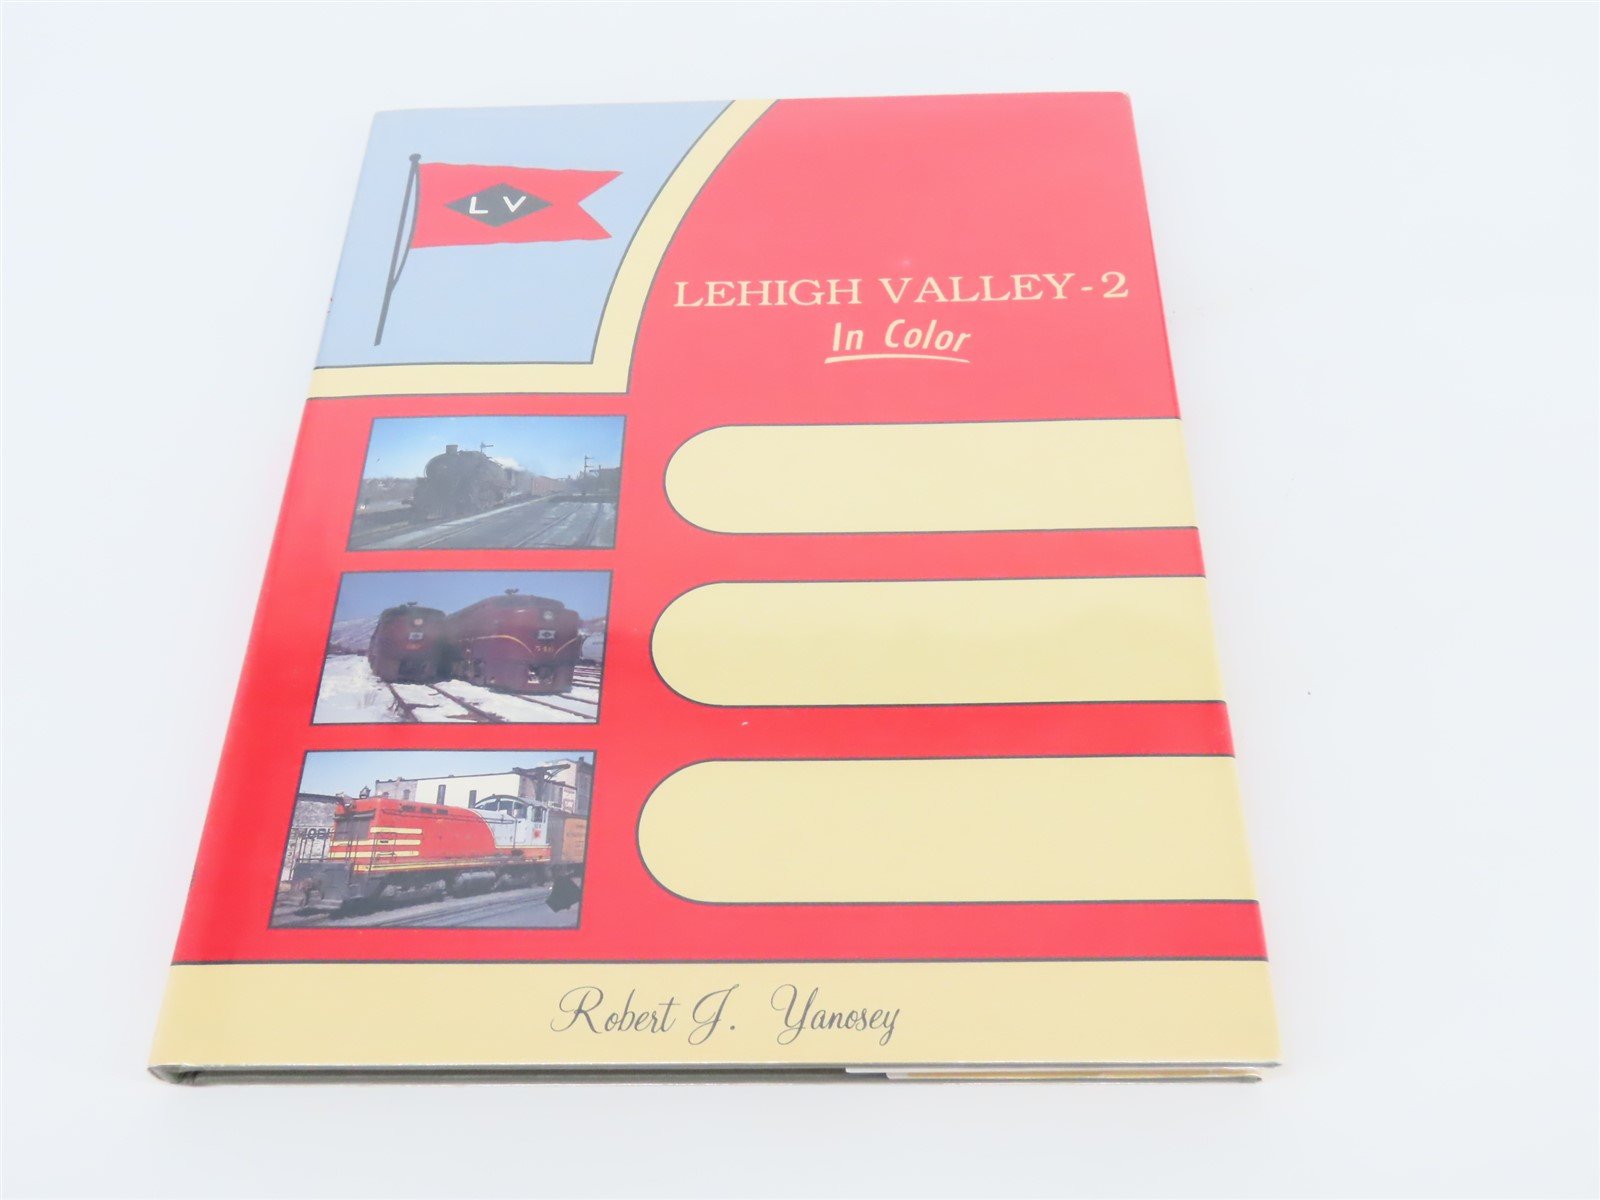 Morning Sun: Lehigh Valley-2 In Color by Robert J. Yanosey ©1991 HC Book